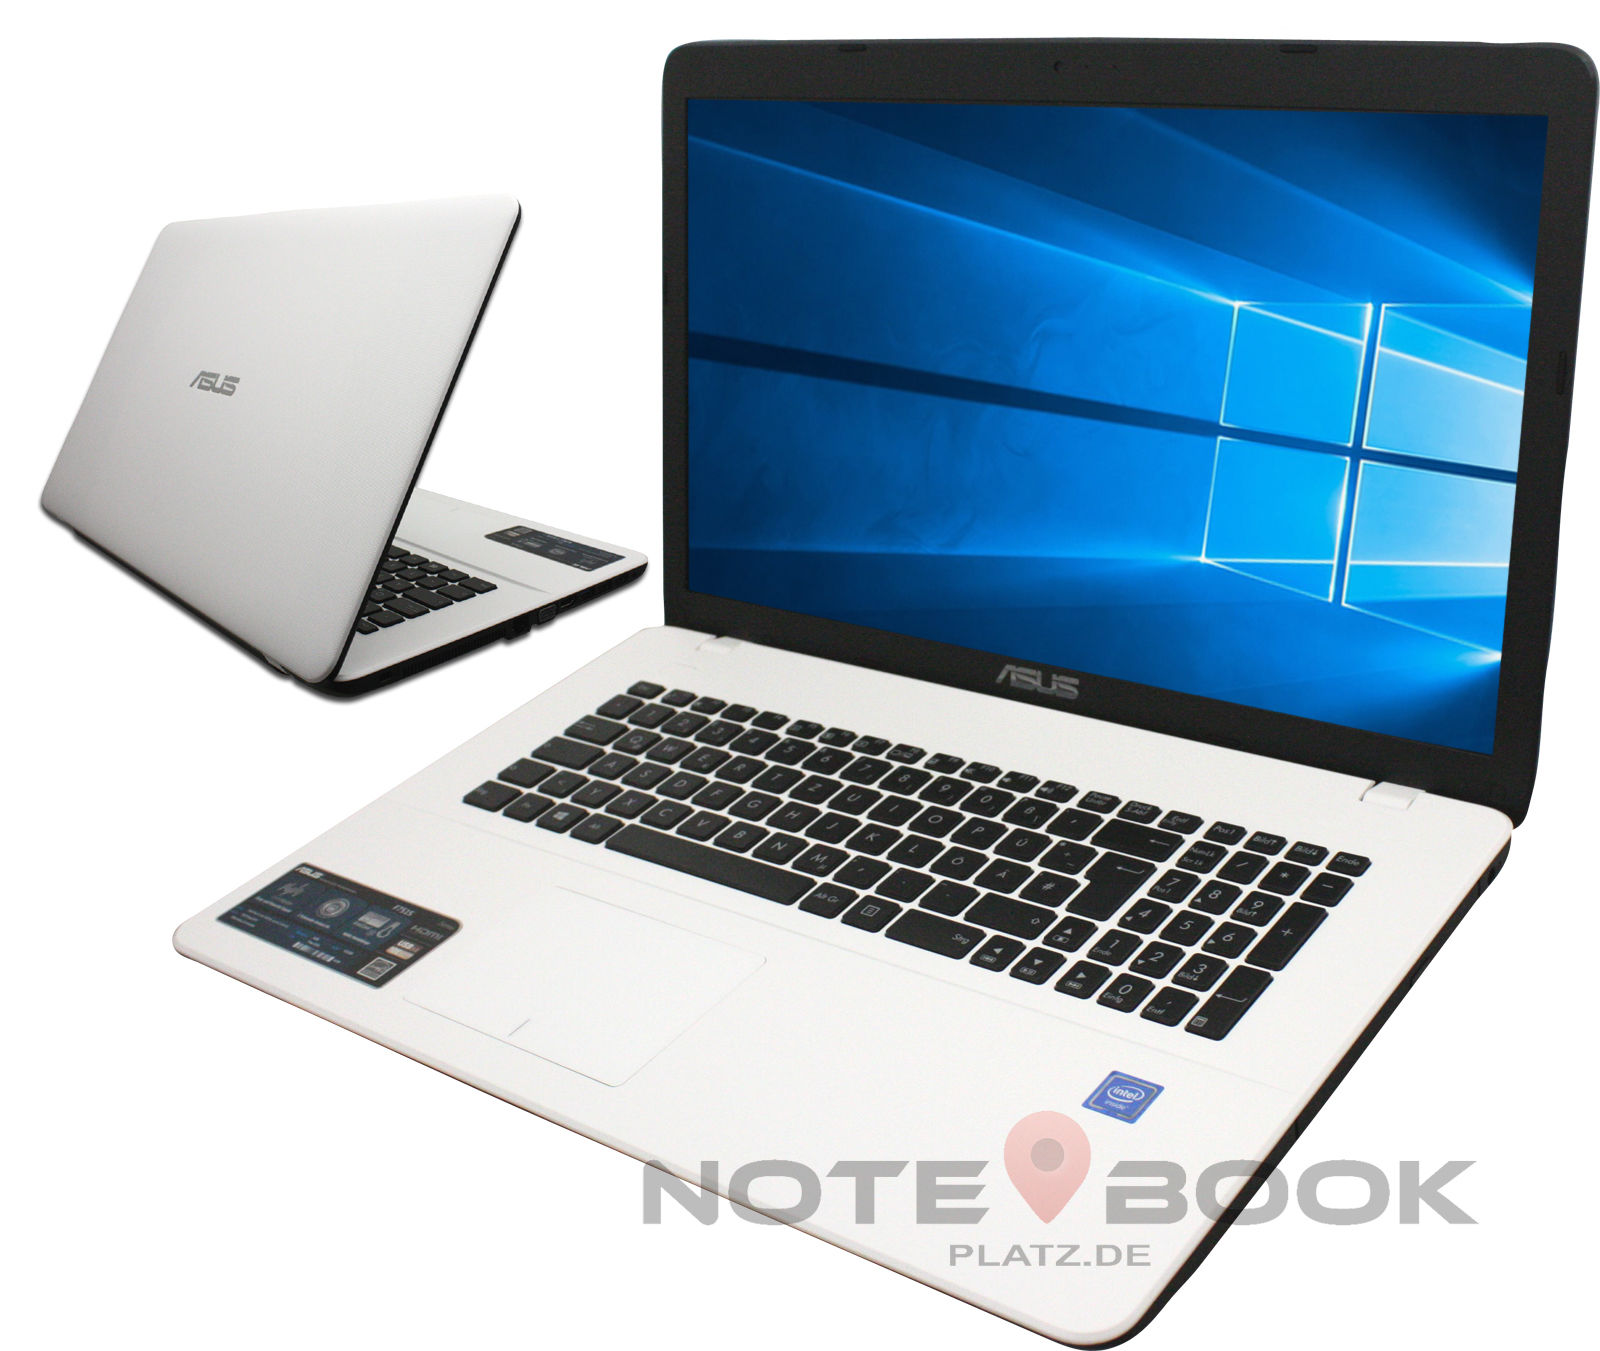 ASUS Notebook 17 Zoll -Weiß -Pentium Quad - 4 x 2,56 GHz - 1T HDD - 4 GB - Win10